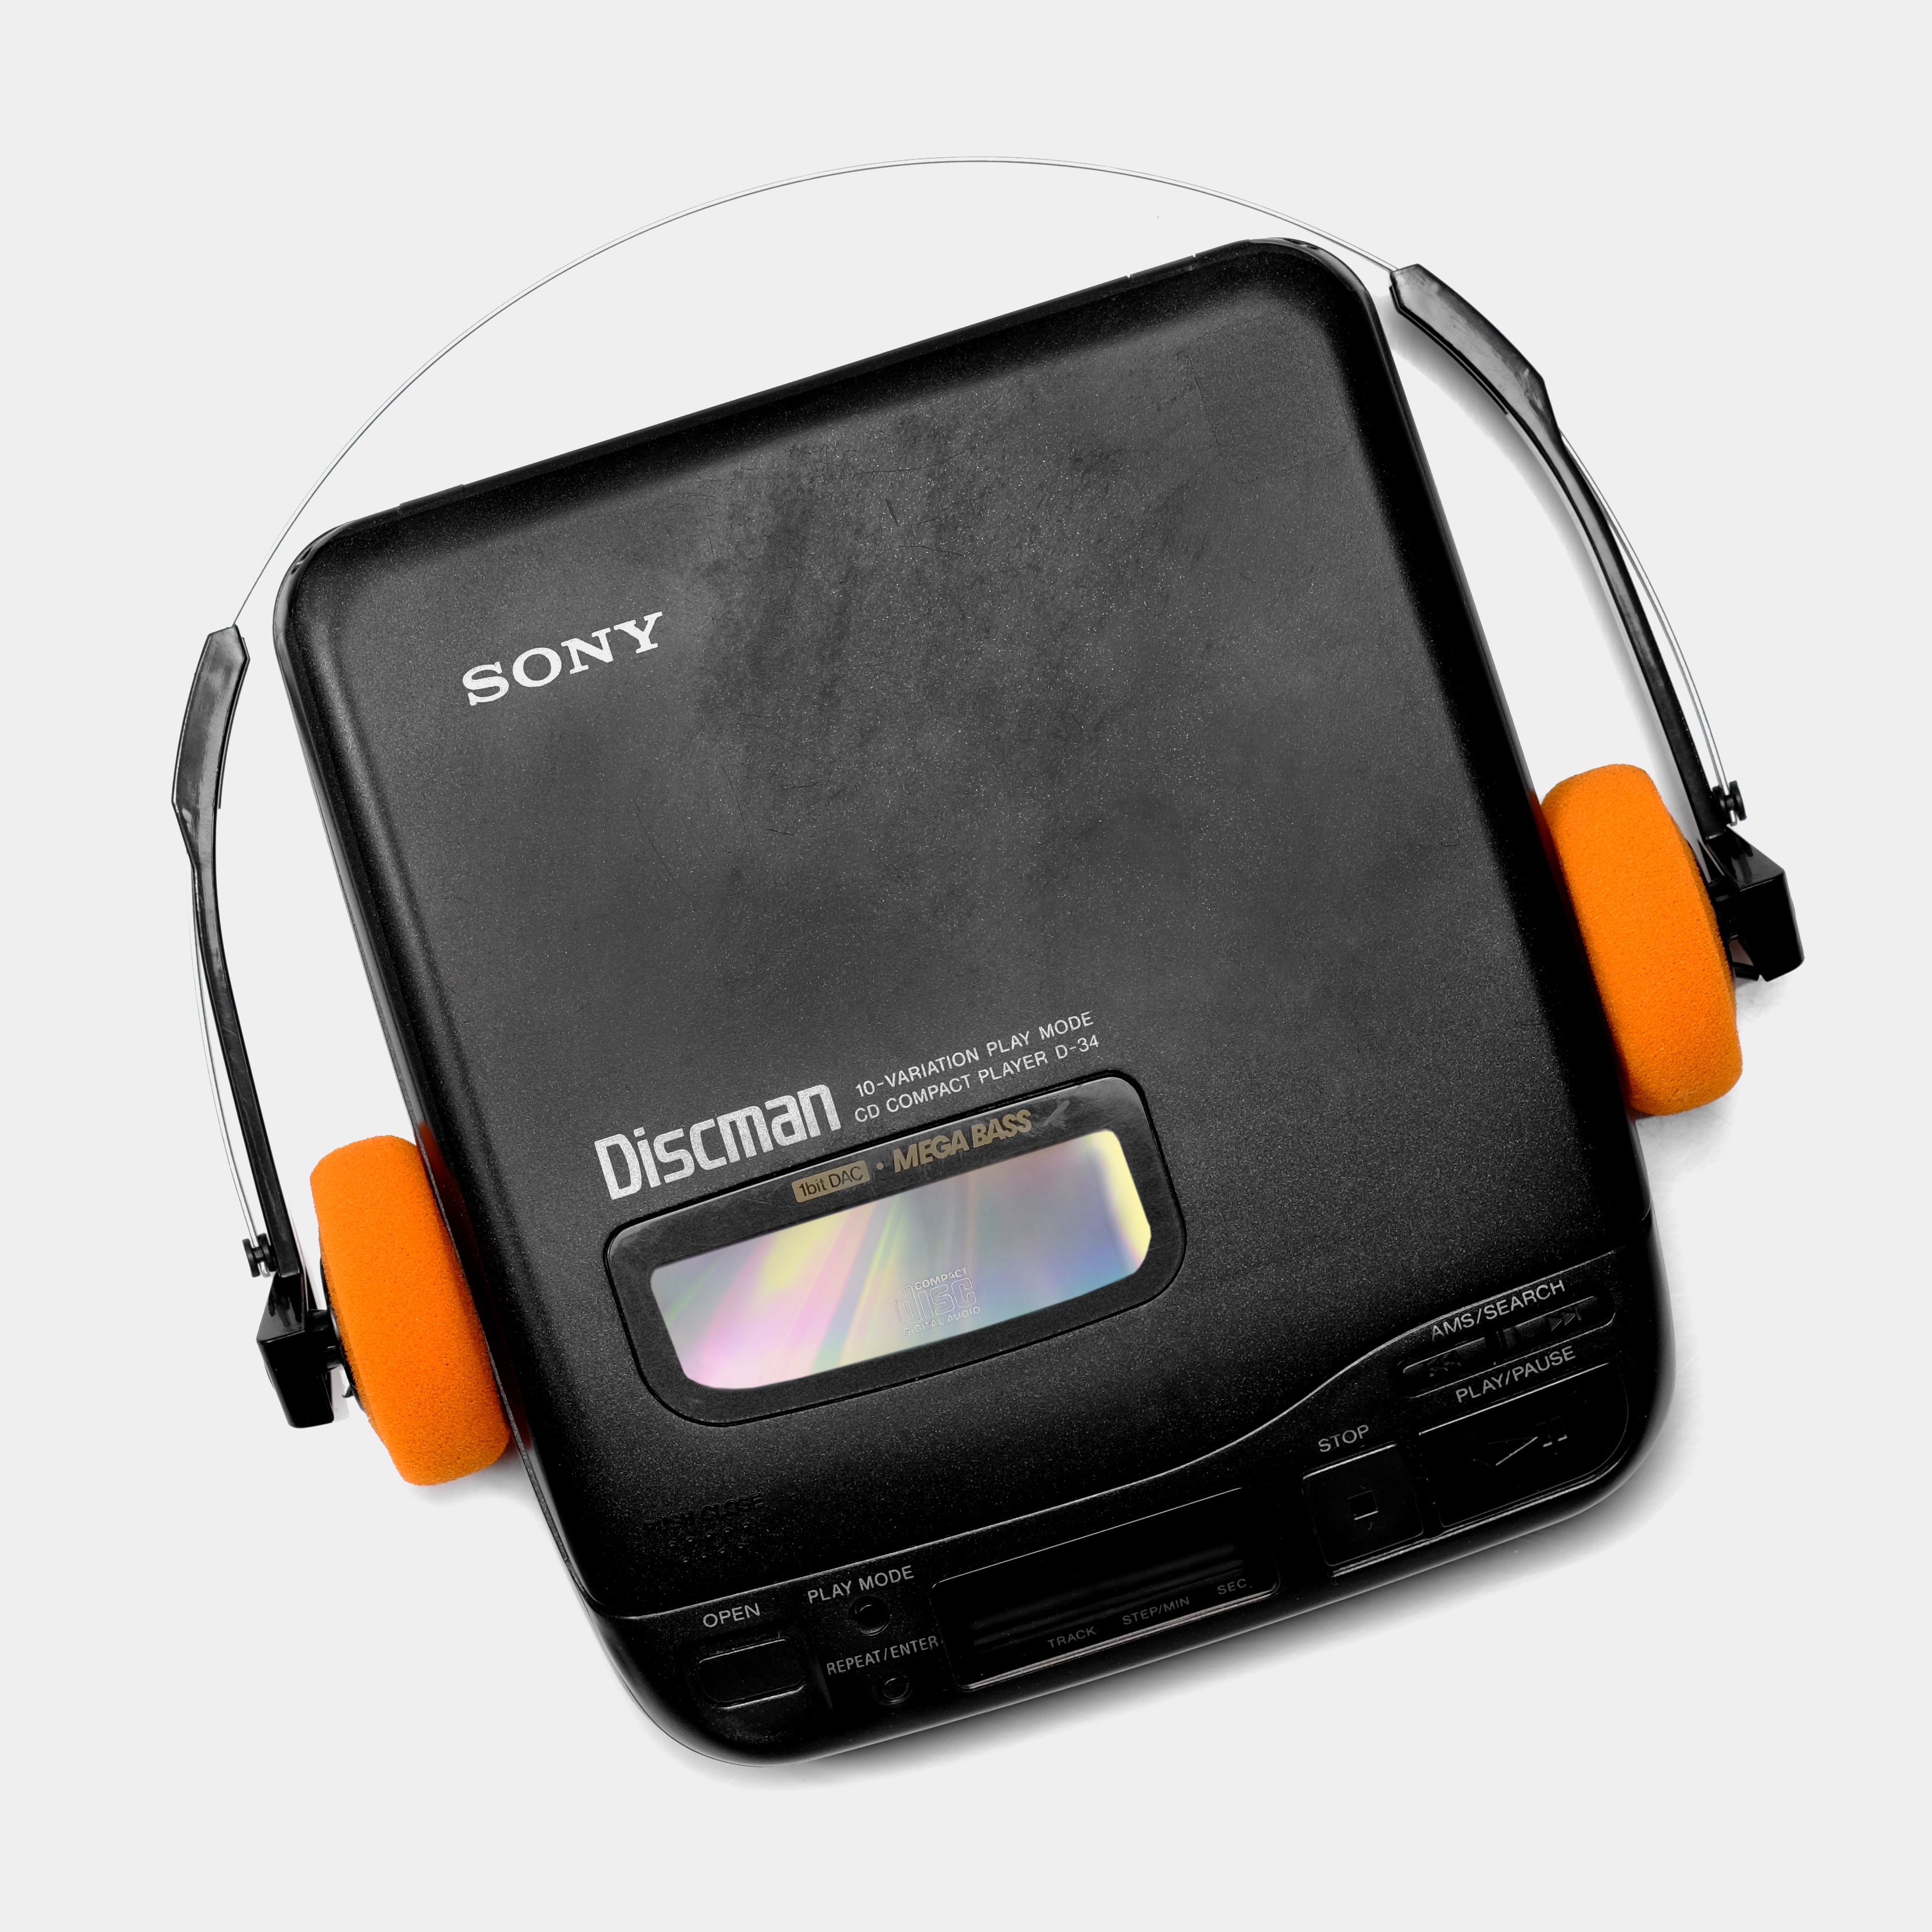 Sony Discman D-34 Portable CD Player